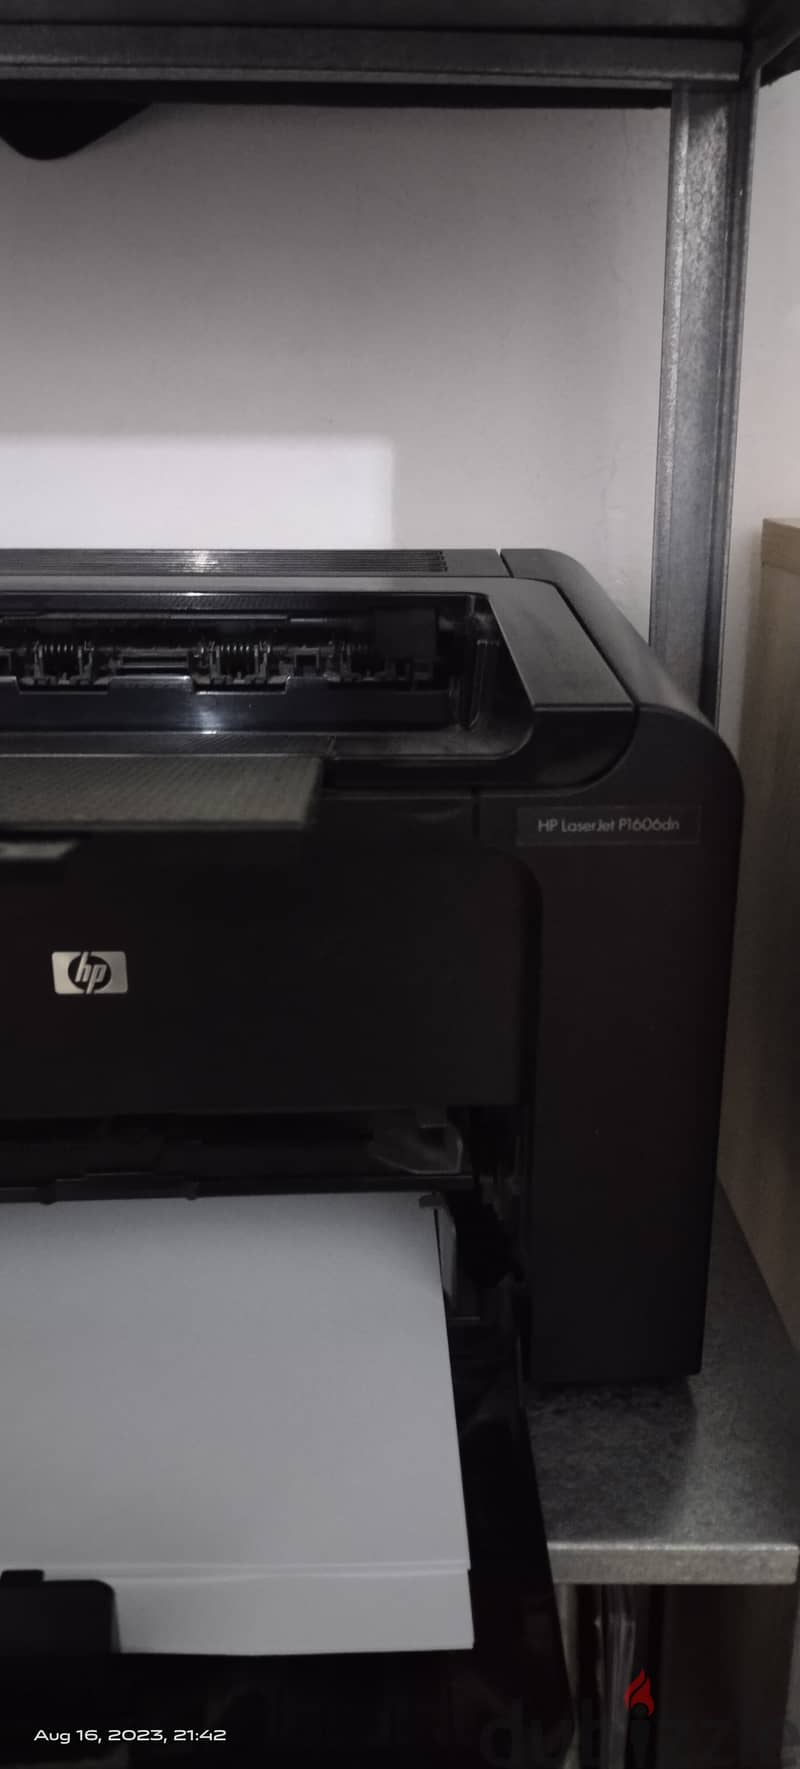 HP Laserjet P1606dn Network Printer 3